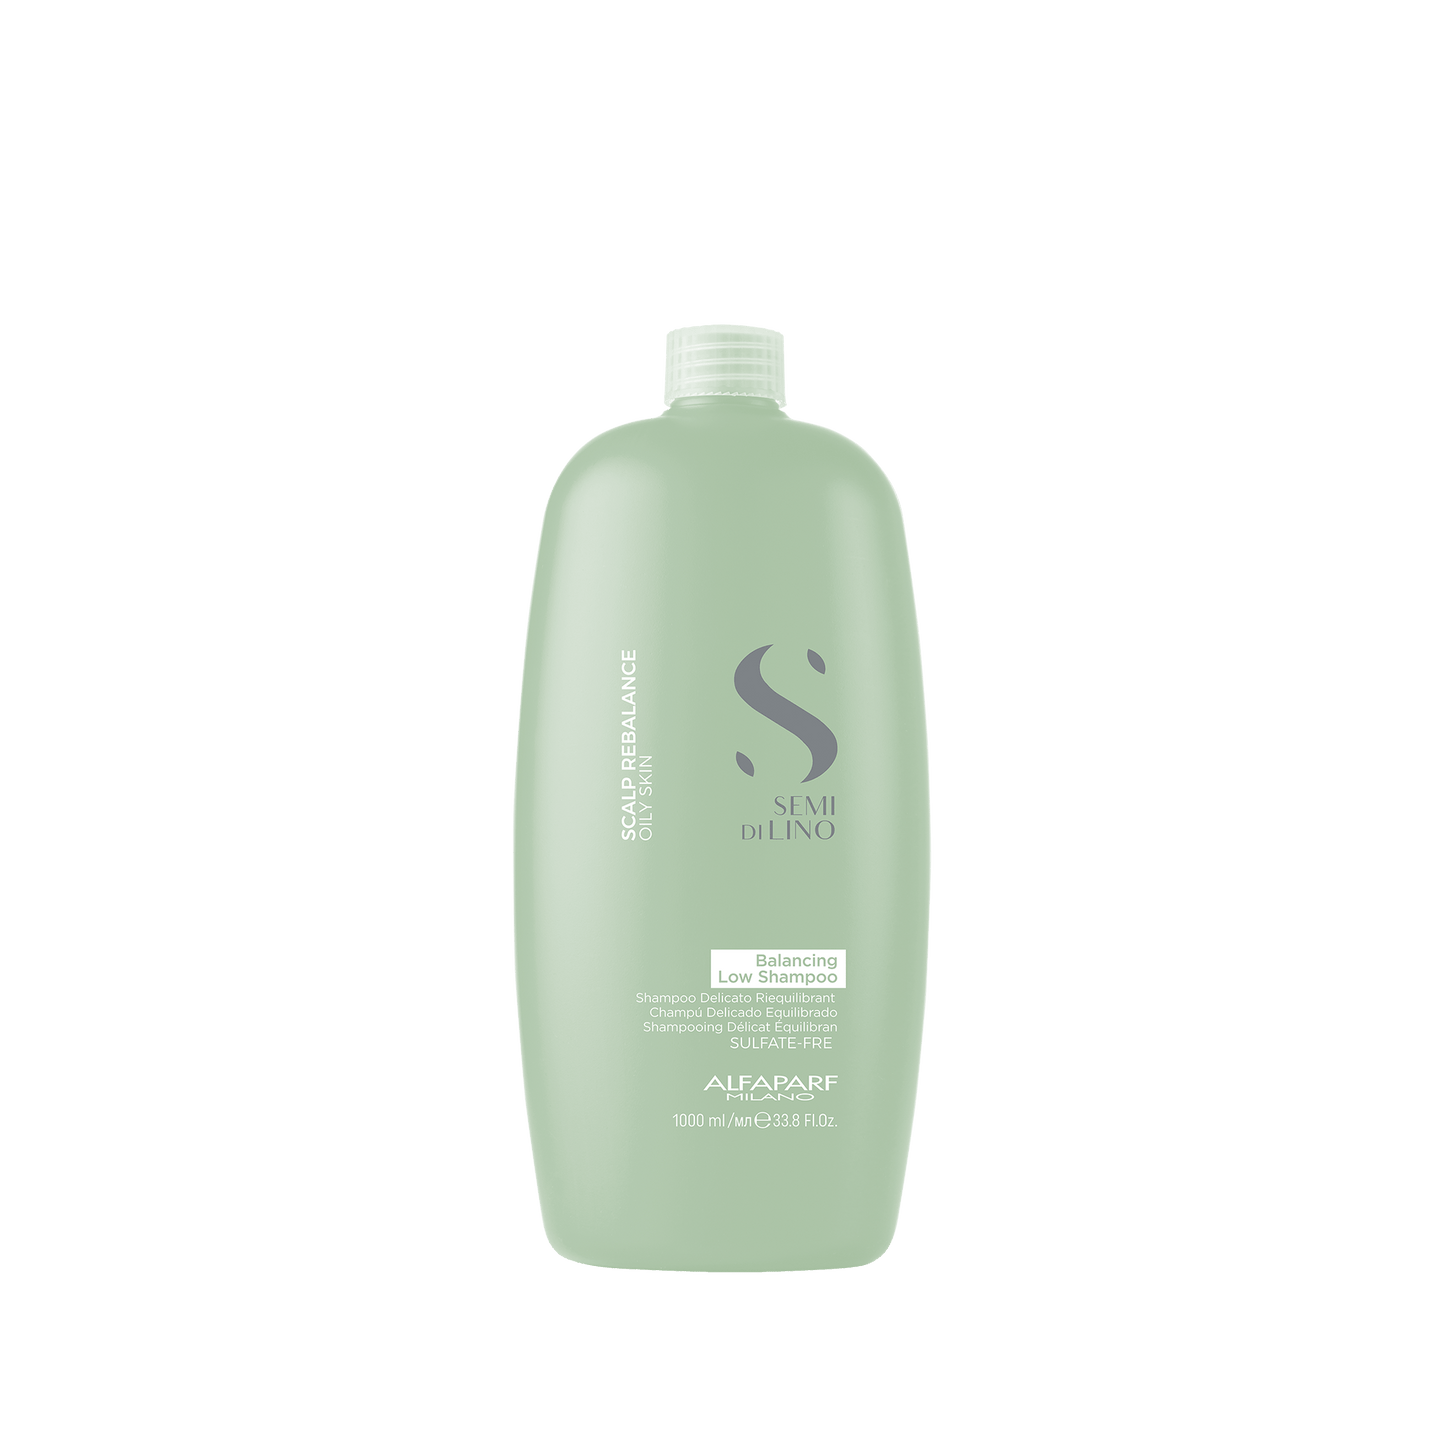 ALFAPARF SEMI DI LINO OILY SKIN Balancing Low Shampoo  250ml 1000ml 平衡油份洗頭水